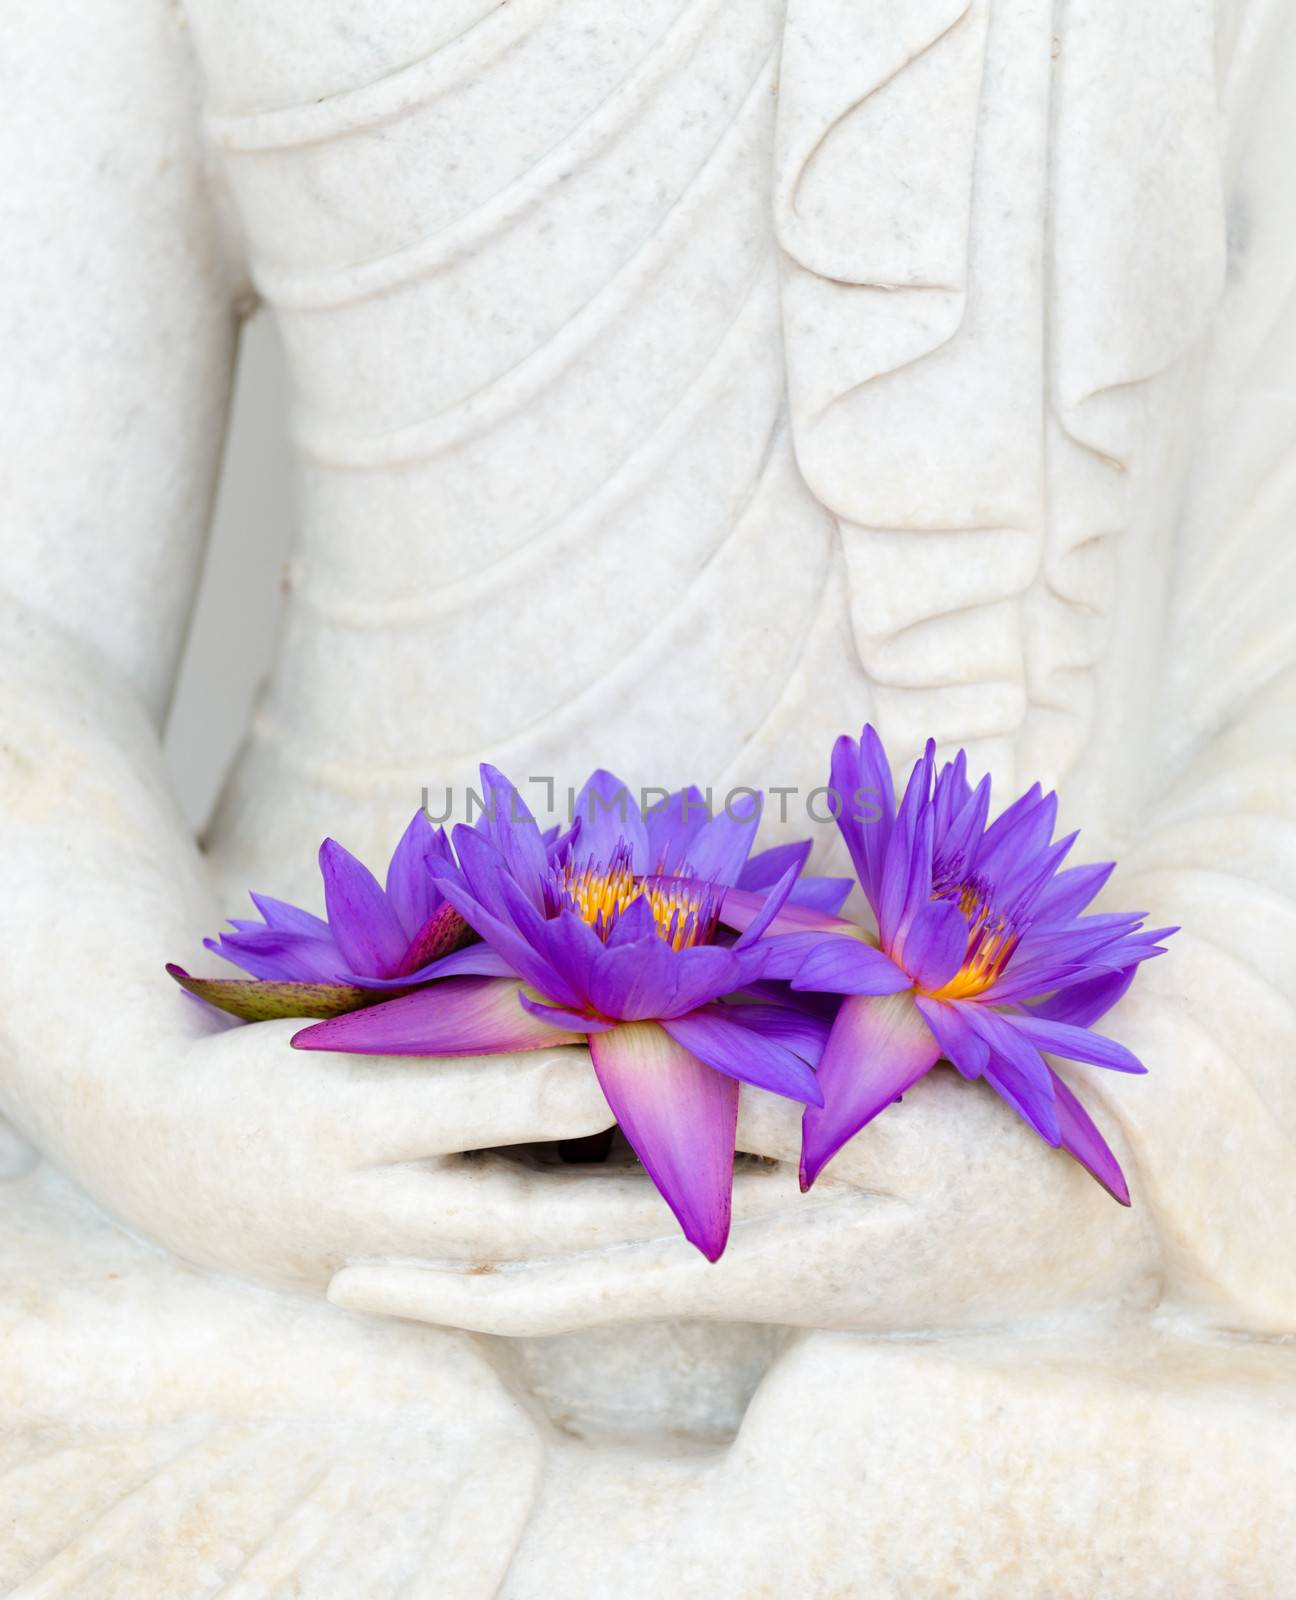 Fresh flowers in Buddha image hands by iryna_rasko